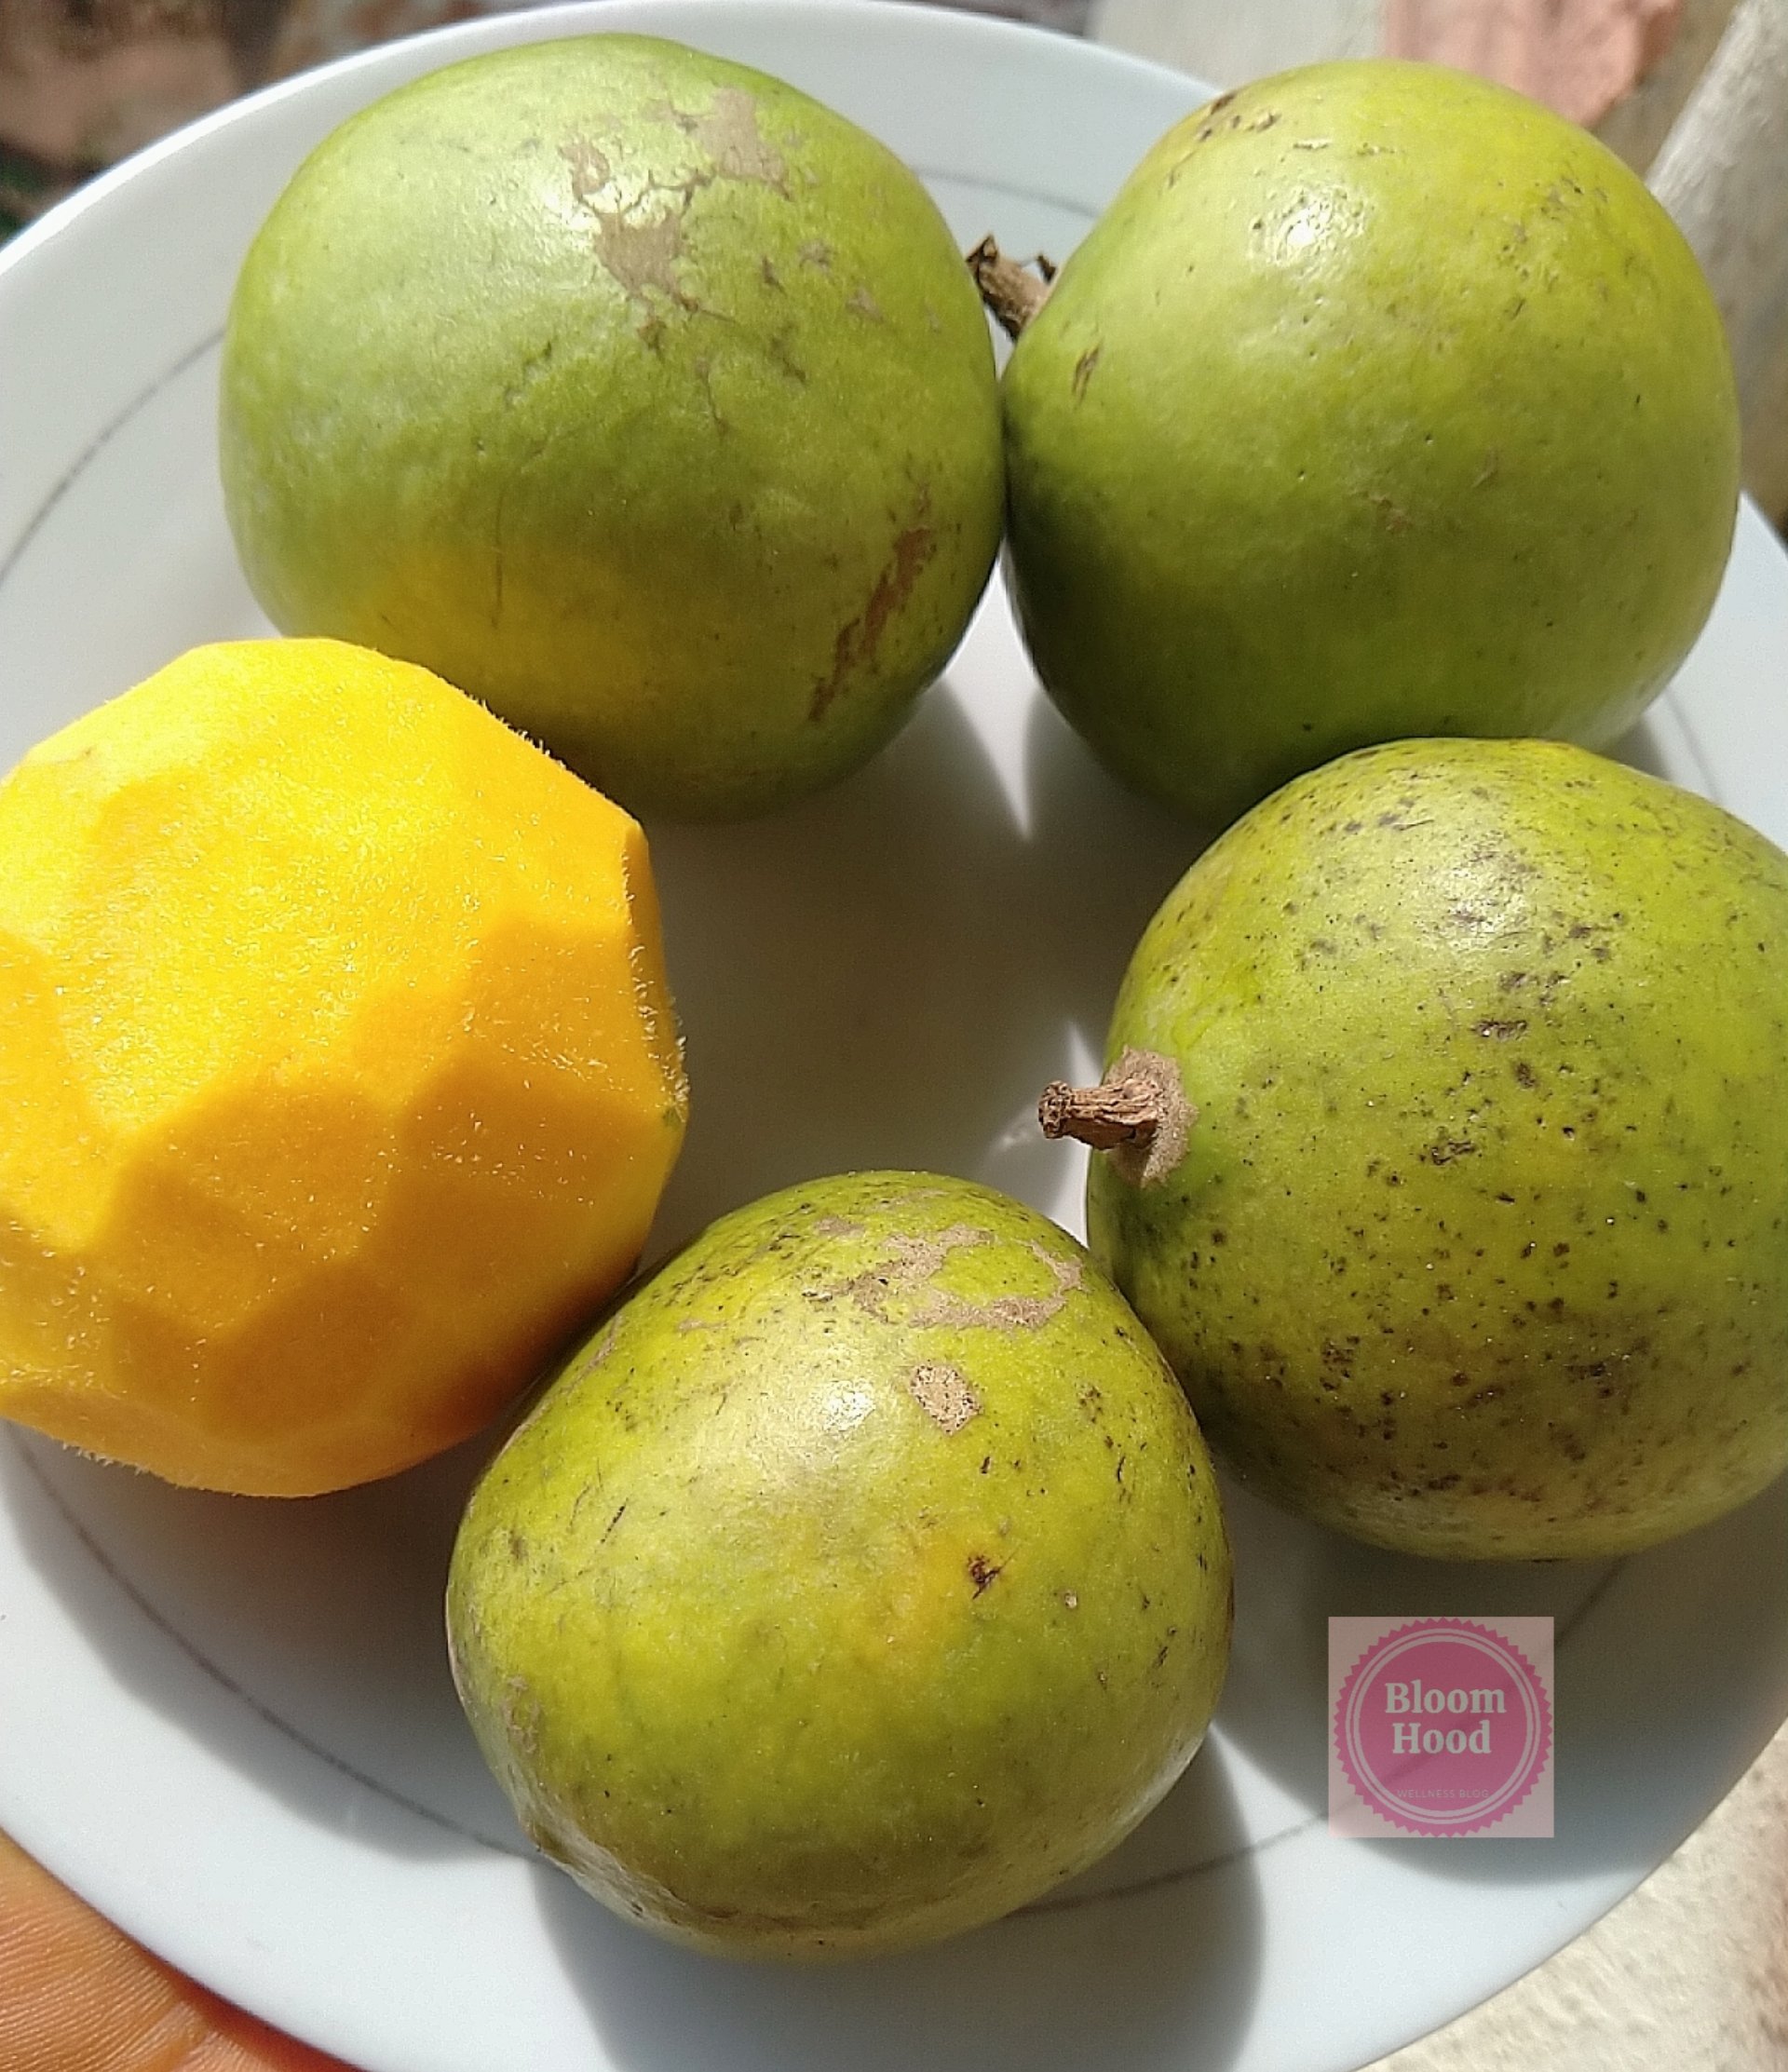 African Mango seed overall wellness